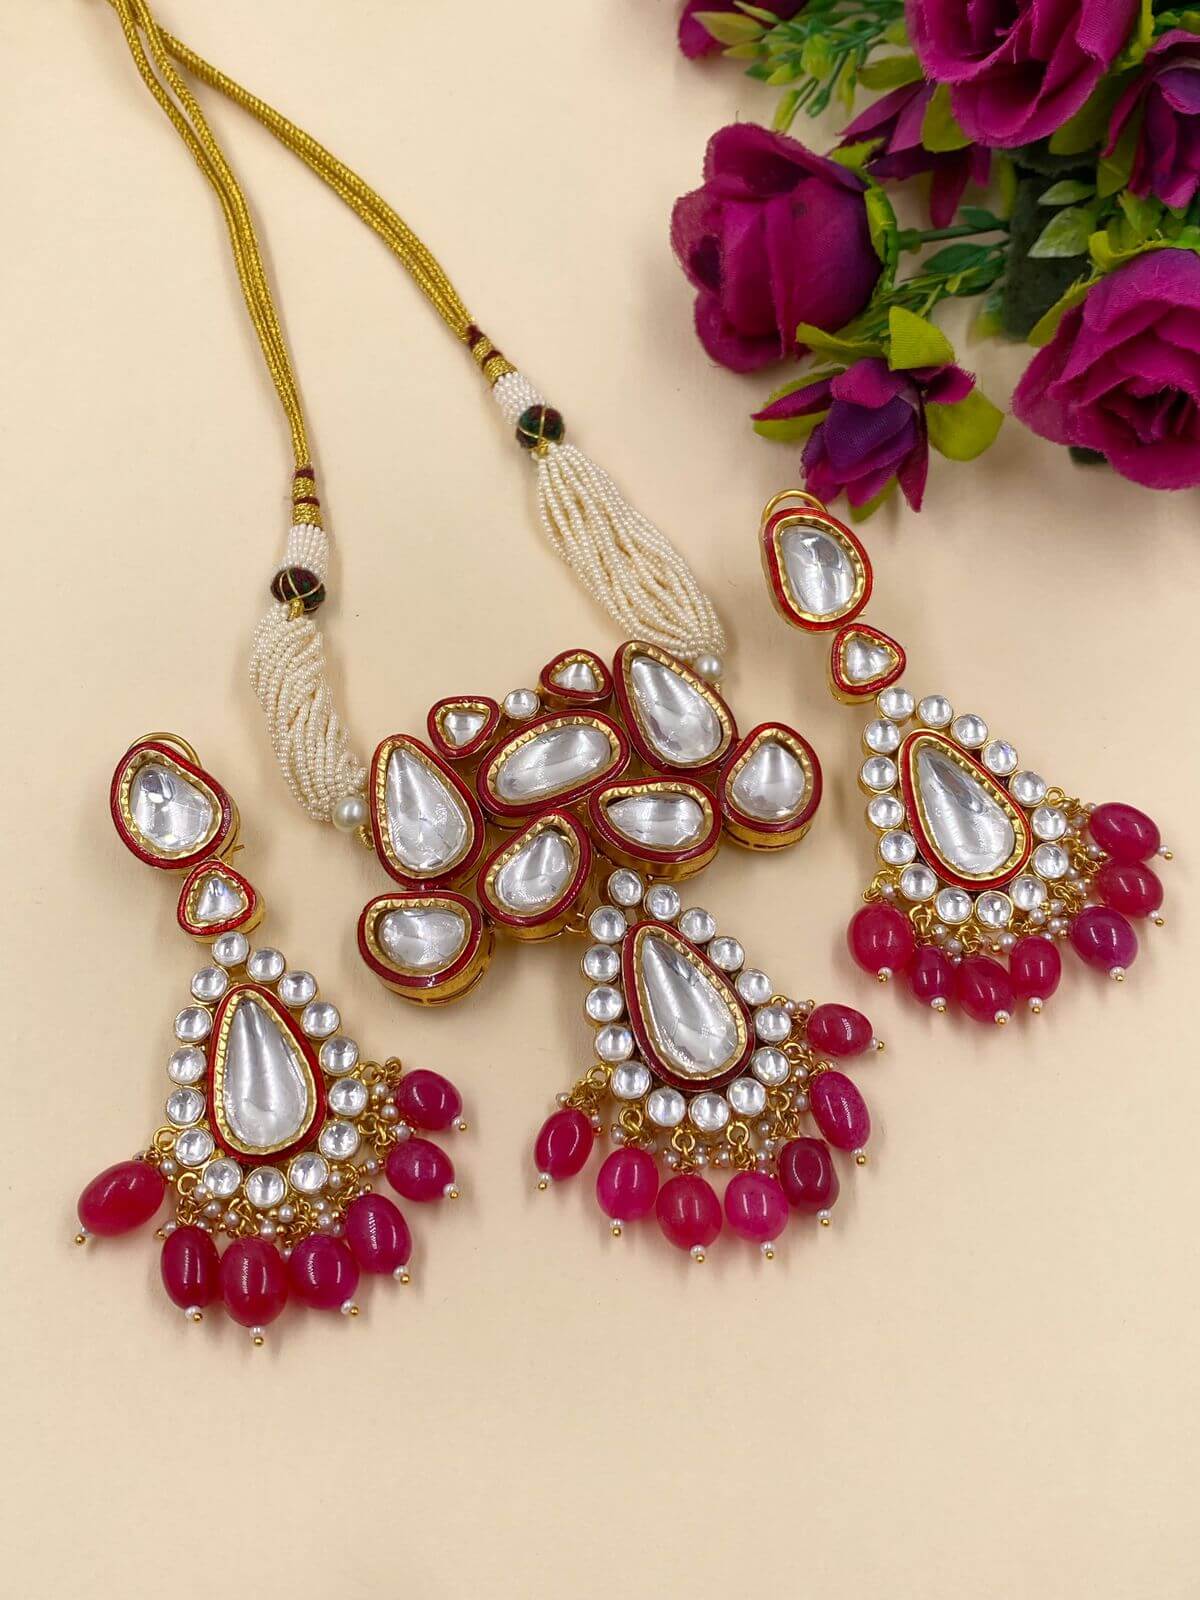 Royal Look Red Meenakari Polki Jewellery Necklace Set for traditional Festivities.